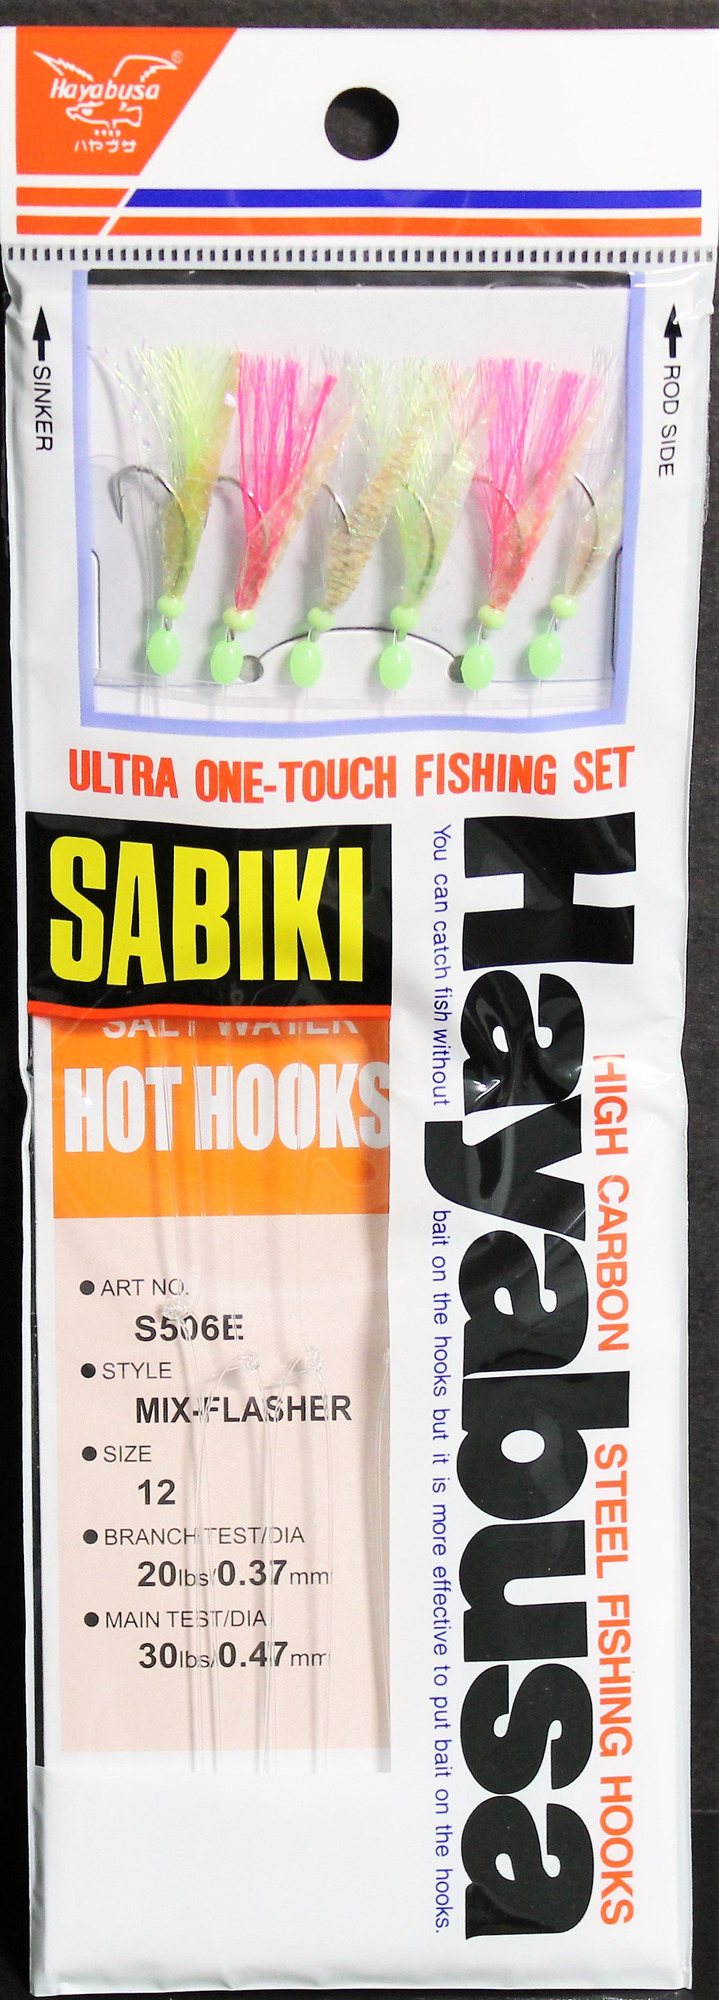 Hayabusa Mixed Flasher Sabiki Hot Hooks Bait Rigs - Model S-506E